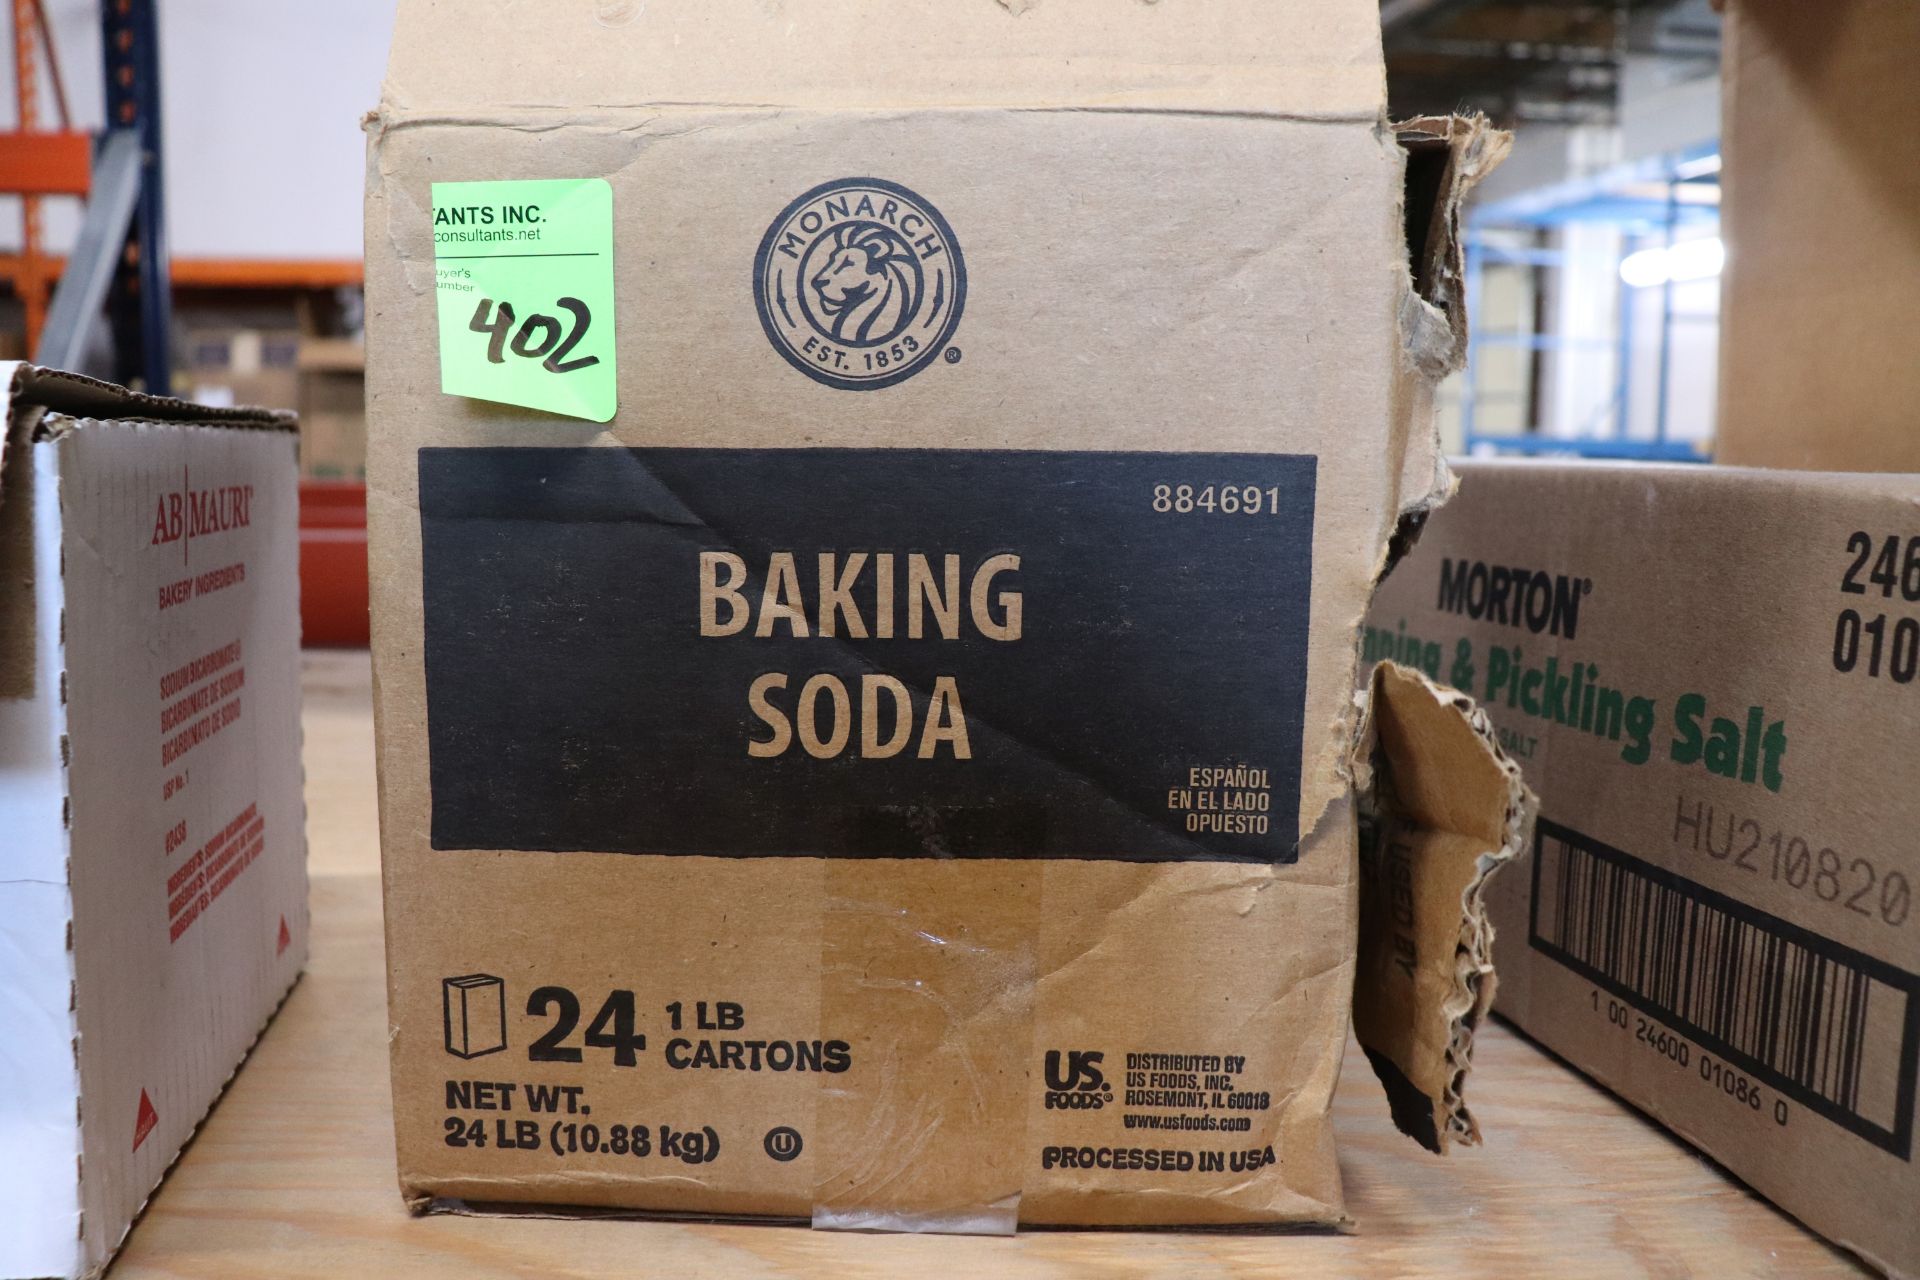 One case of baking soda containing twenty-four 1-lb boxes